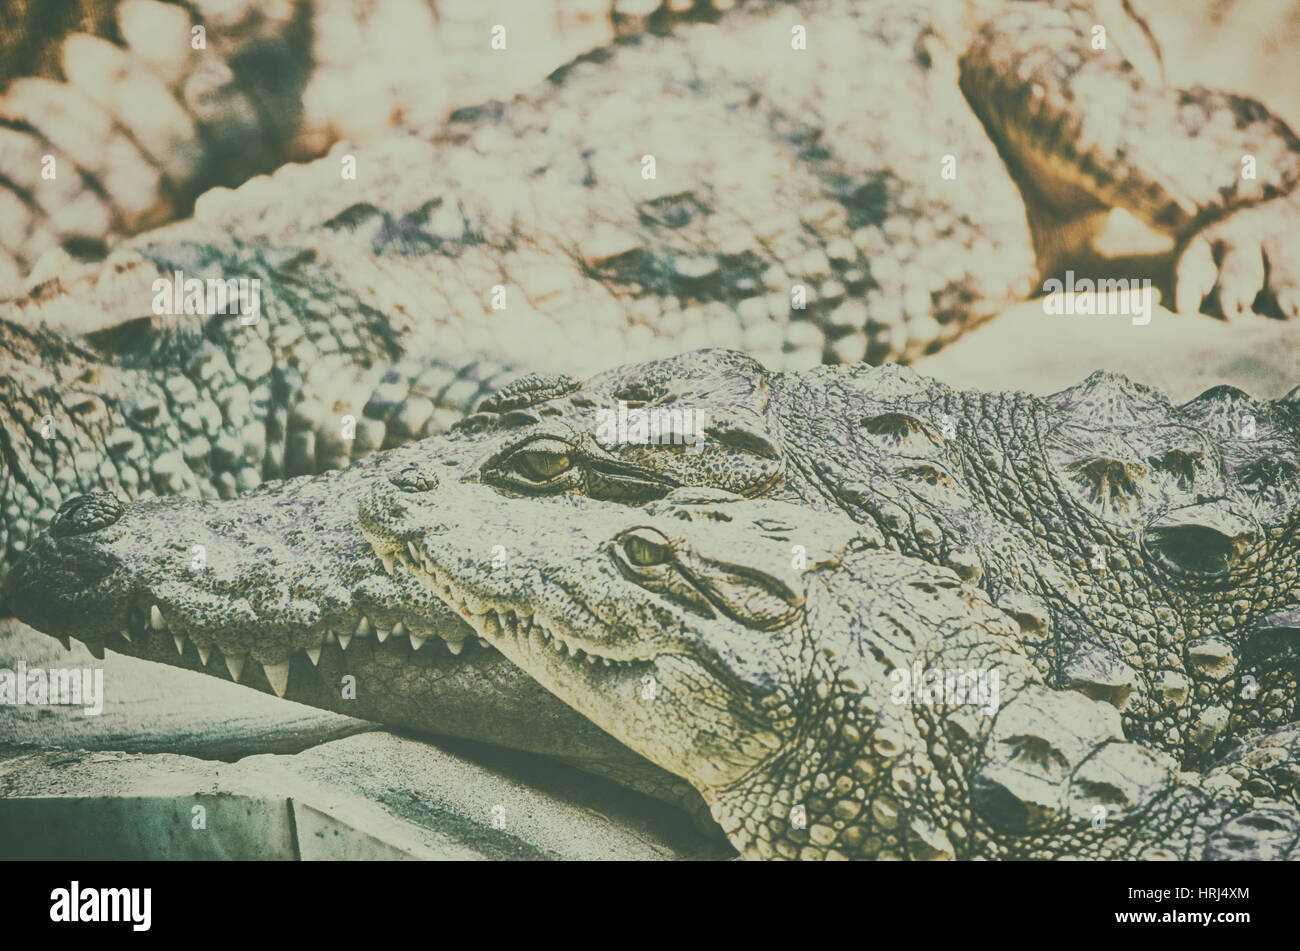 Nile Crocodile very closeup image capture. Stock Photo